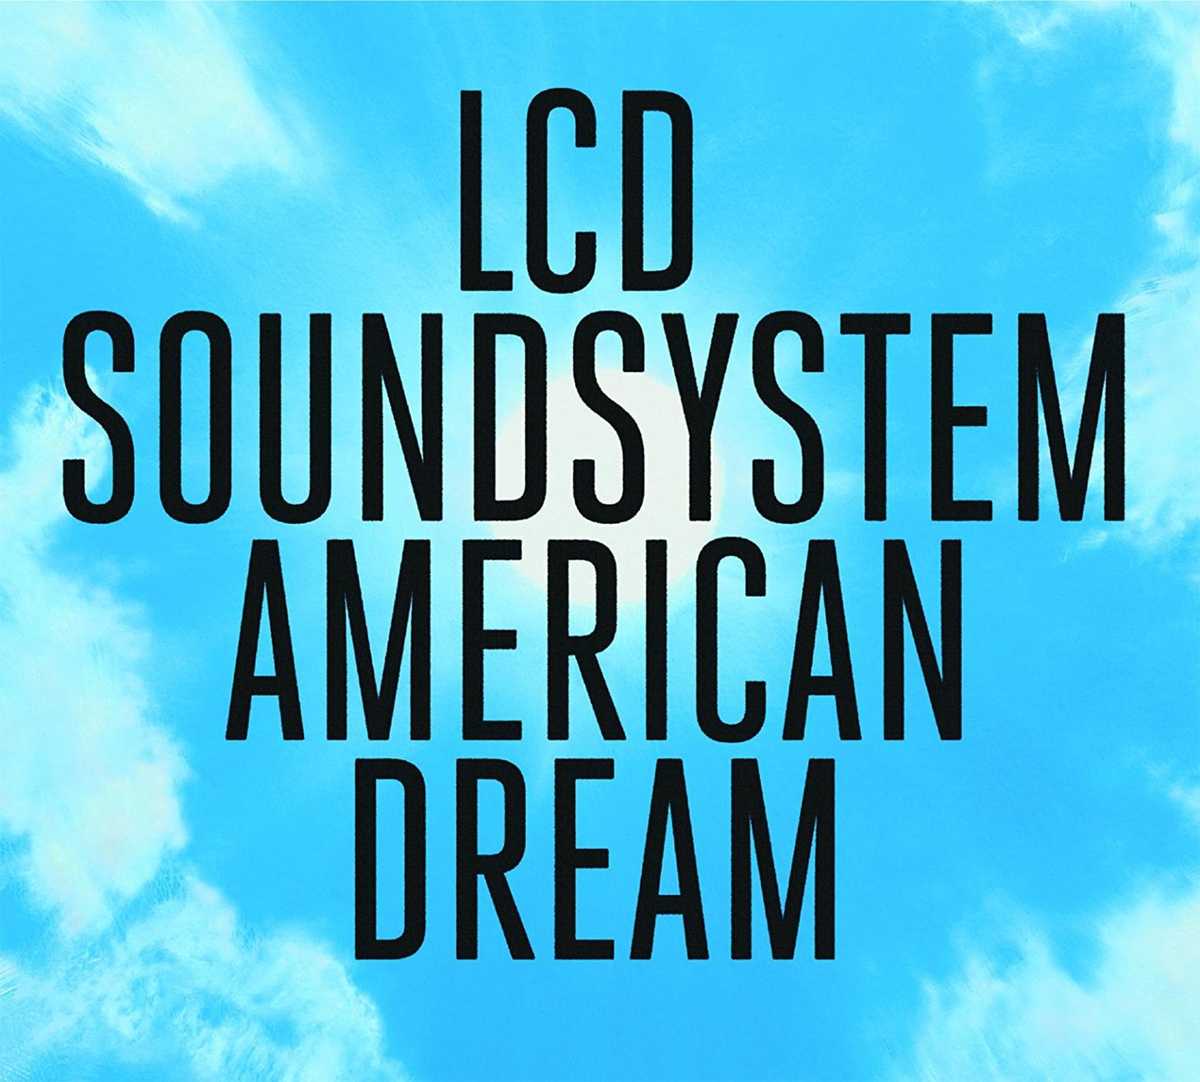 lcd-soundsystem-american-dream